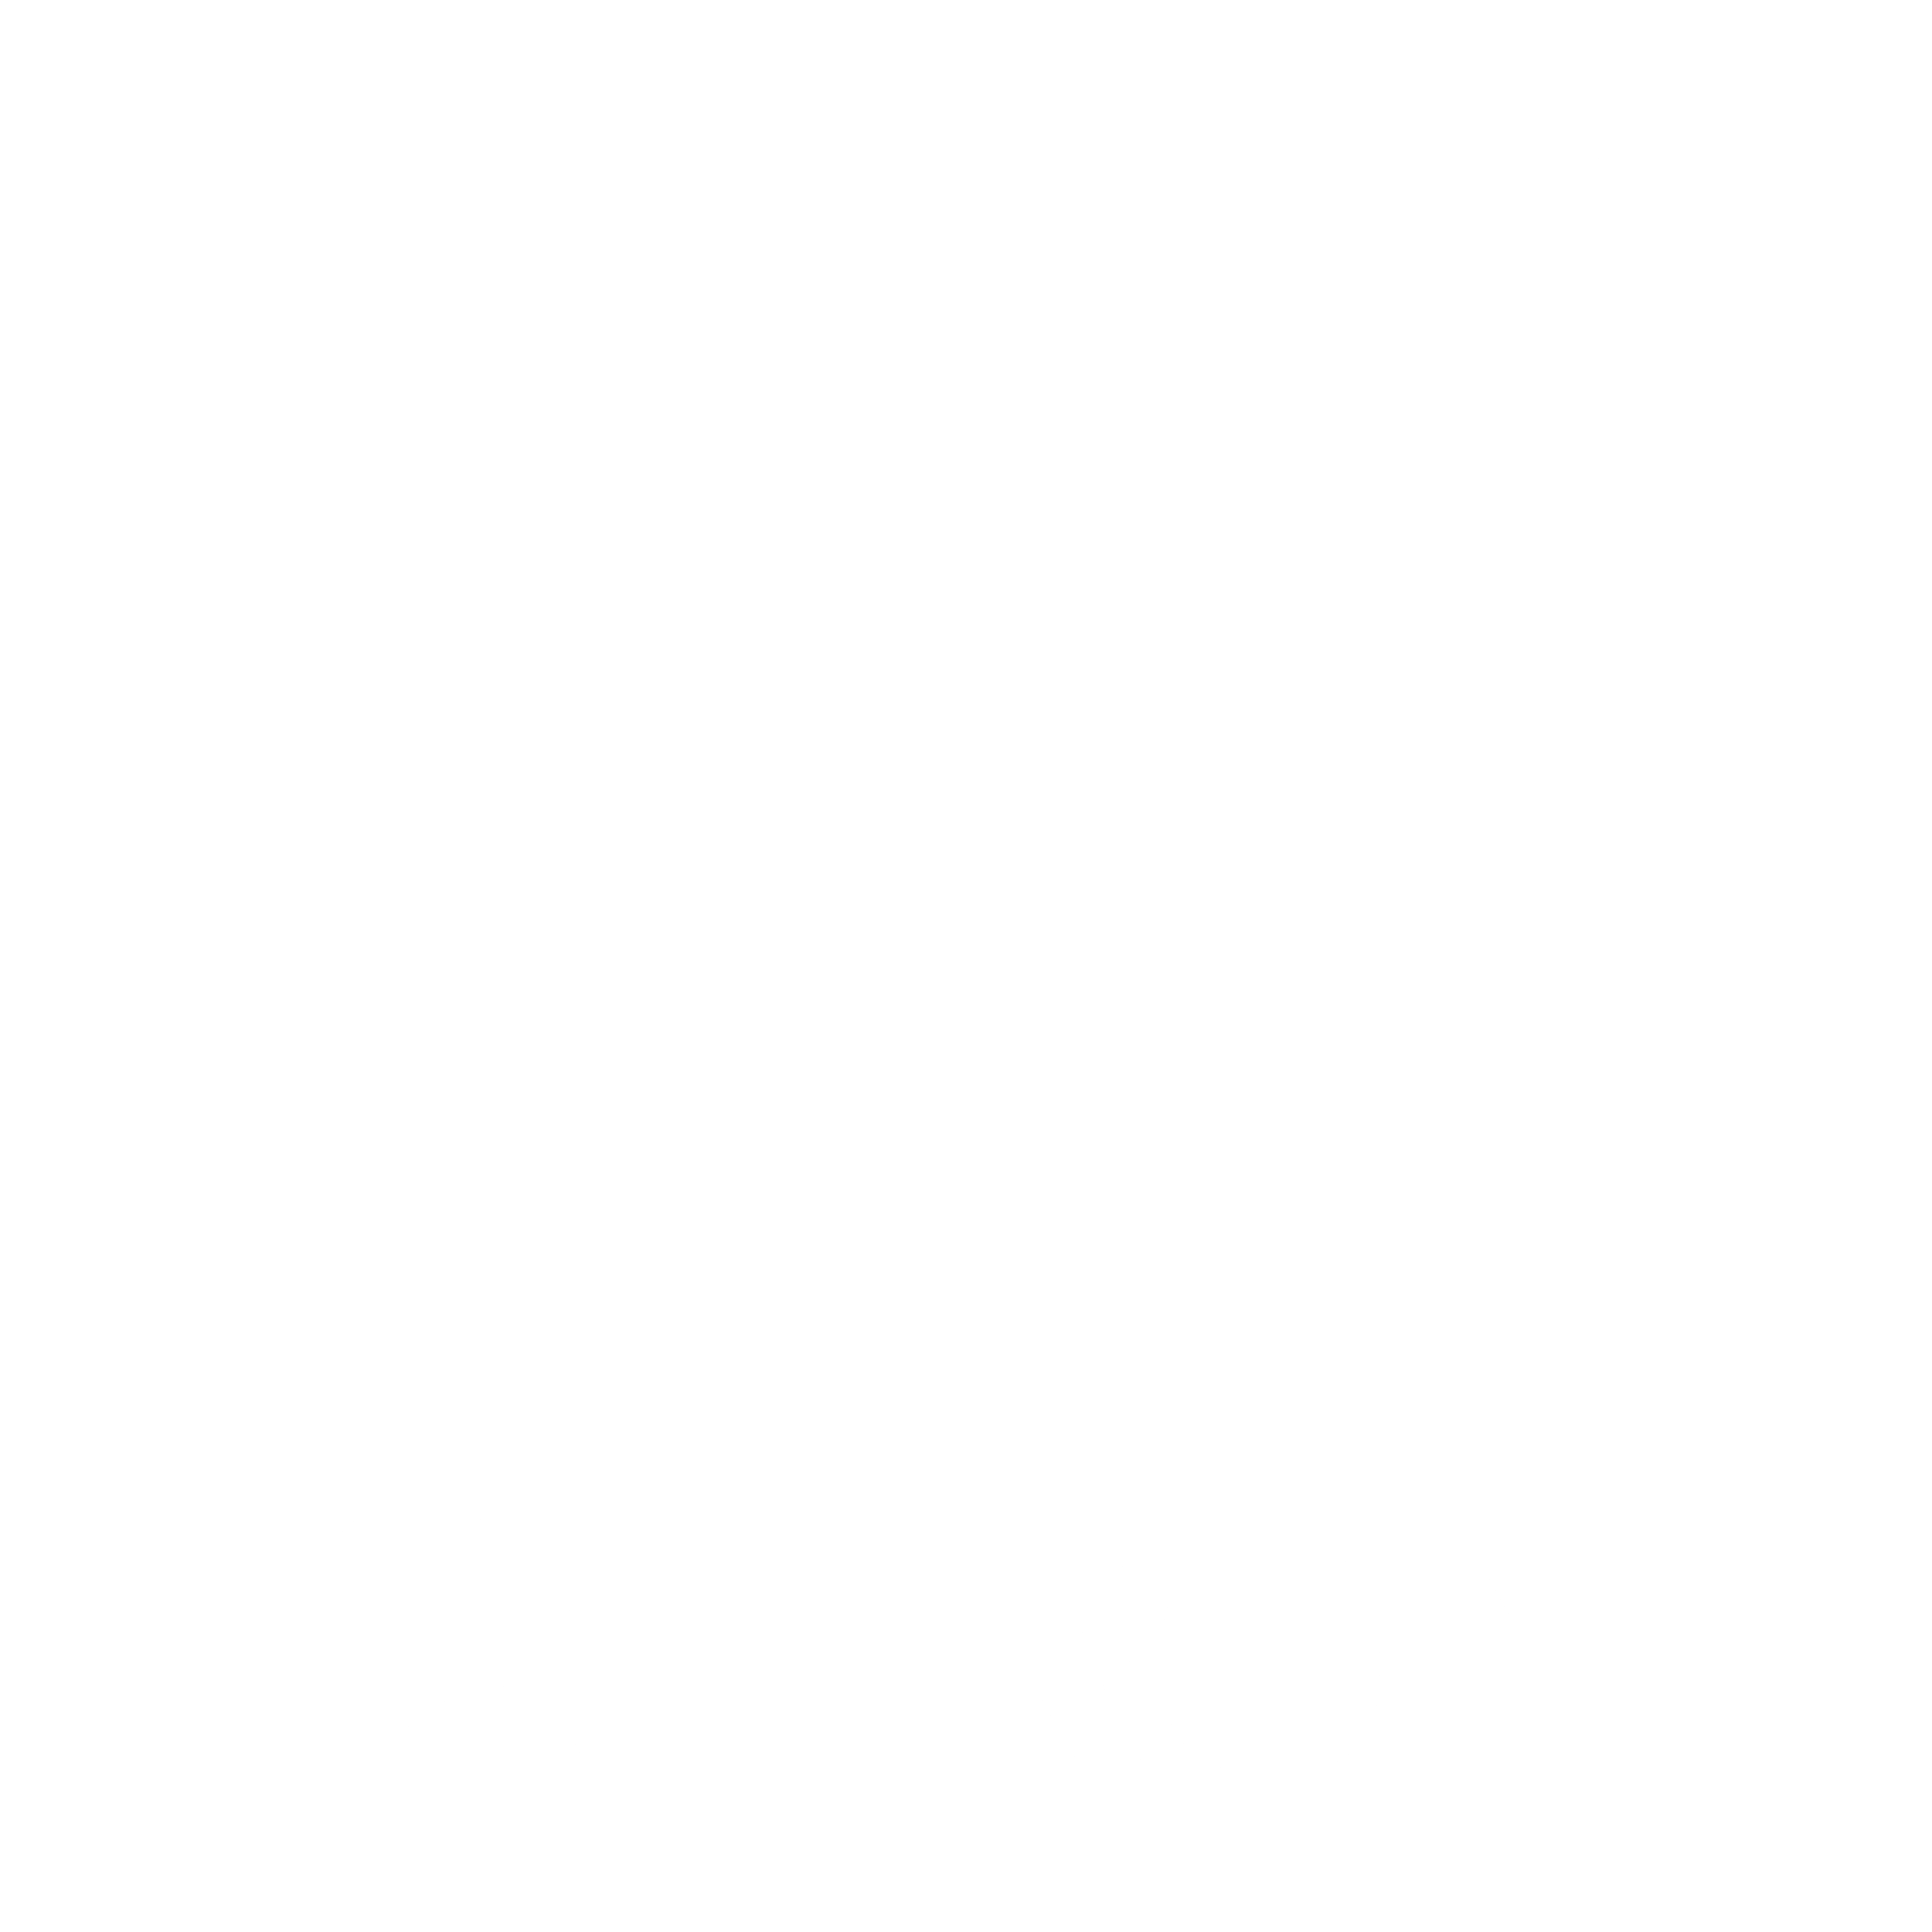 Petron Logo - Petron Logo PNG Transparent & SVG Vector - Freebie Supply